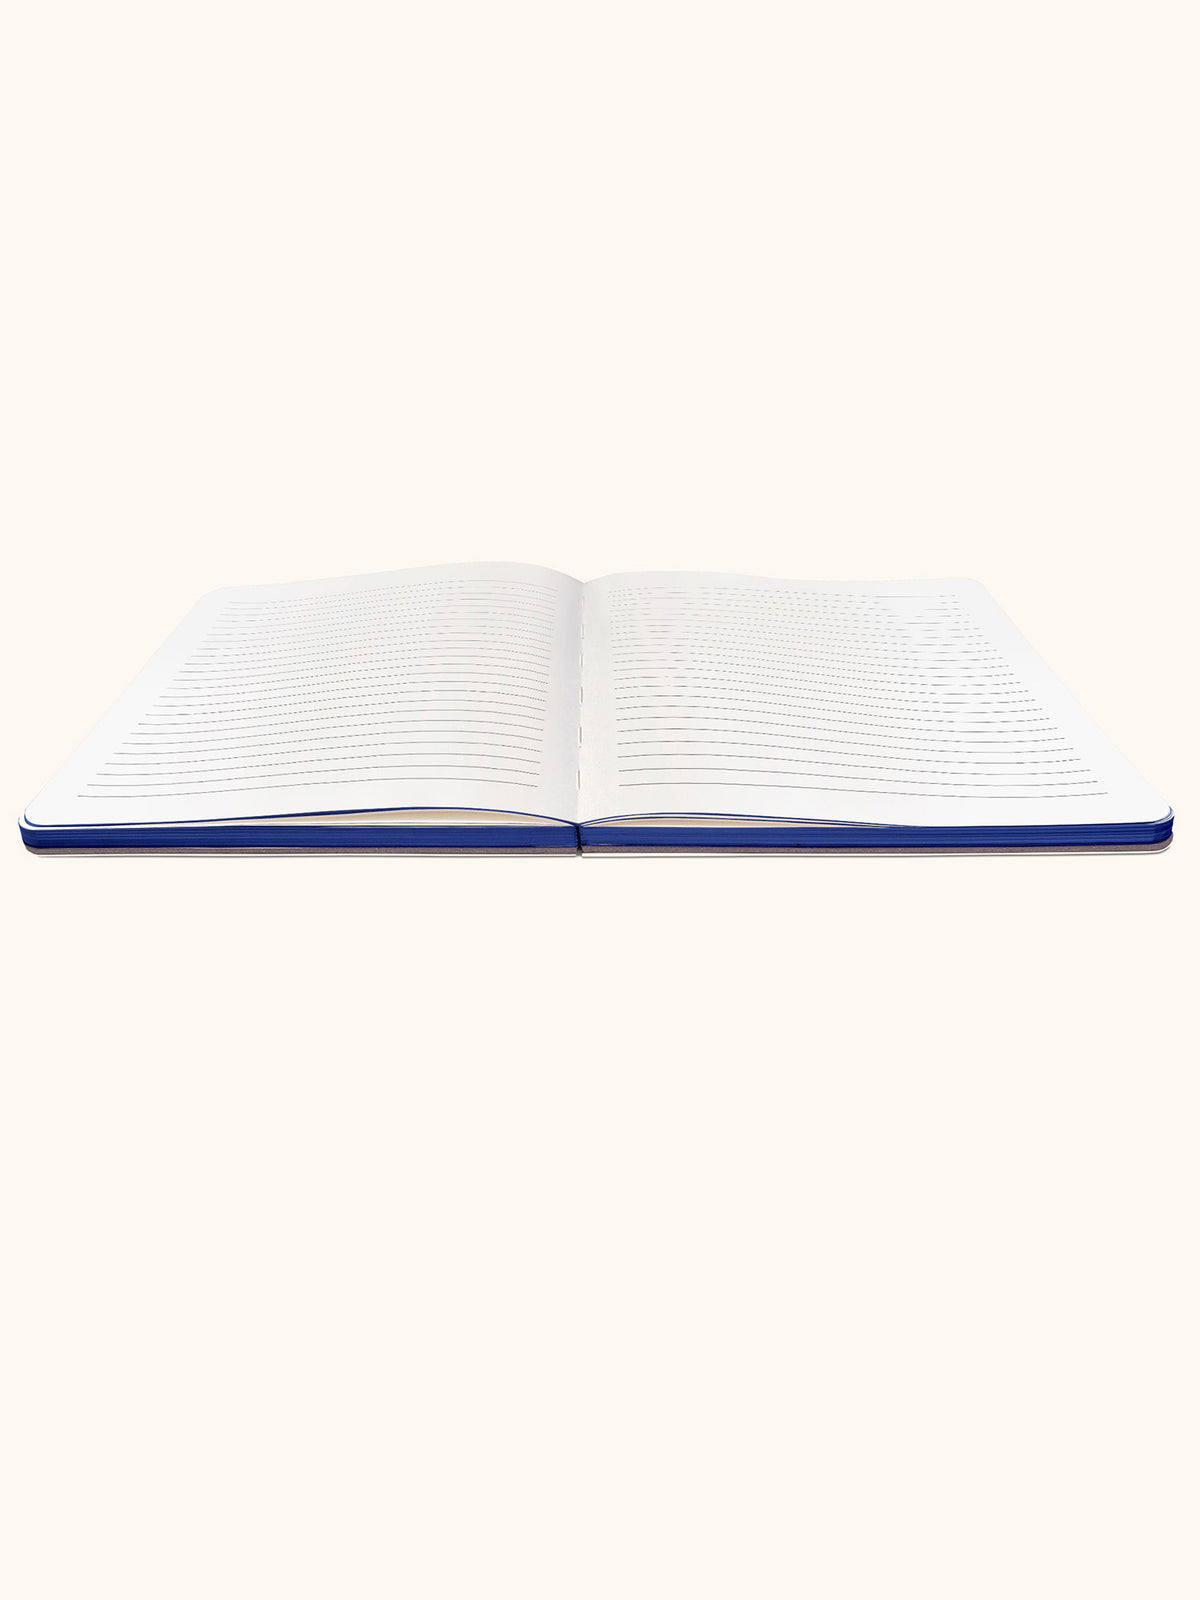 Pink Medium Large Coptic Bound Hardcover Journal — paperiaarre